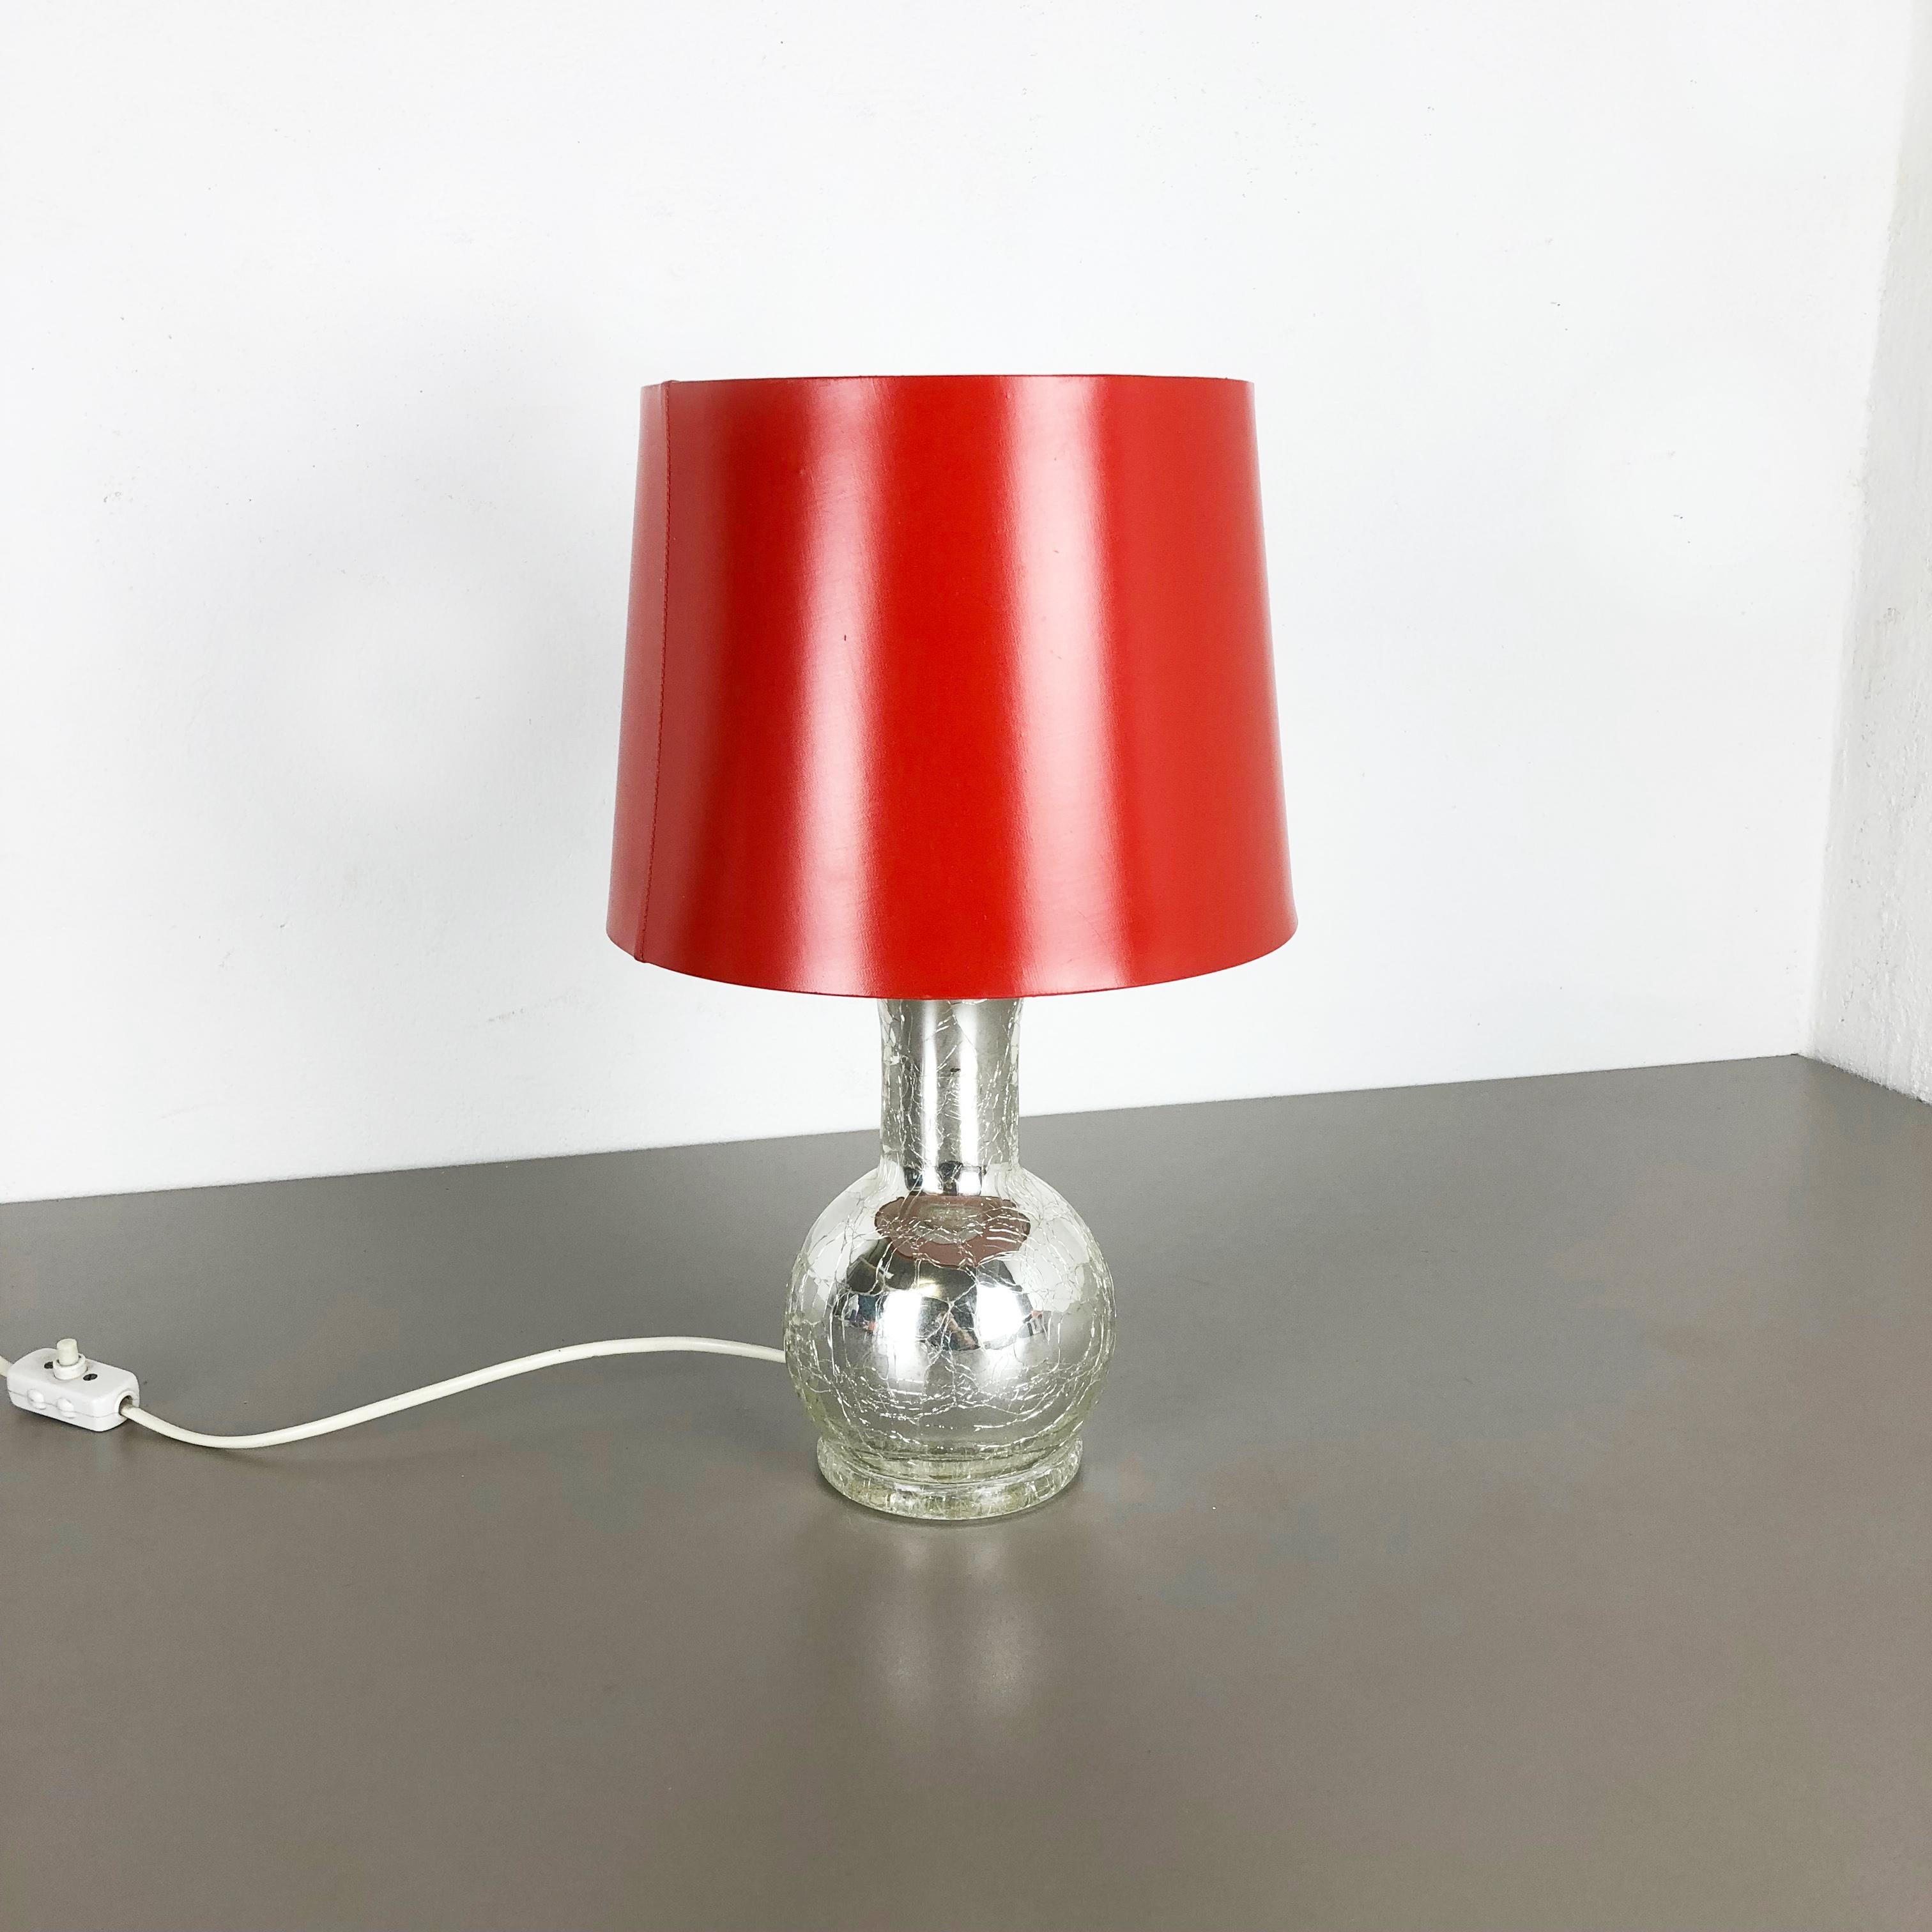 Article:

Table light



Producer: 

Luxus Vittsjö, Sweden


Design:

Uno & Östen Kristiansson


Origin: 

Sweden


Age: 

1970s



Description: 

This fantastic table light was designed by Uno & Östen Kristiansson and